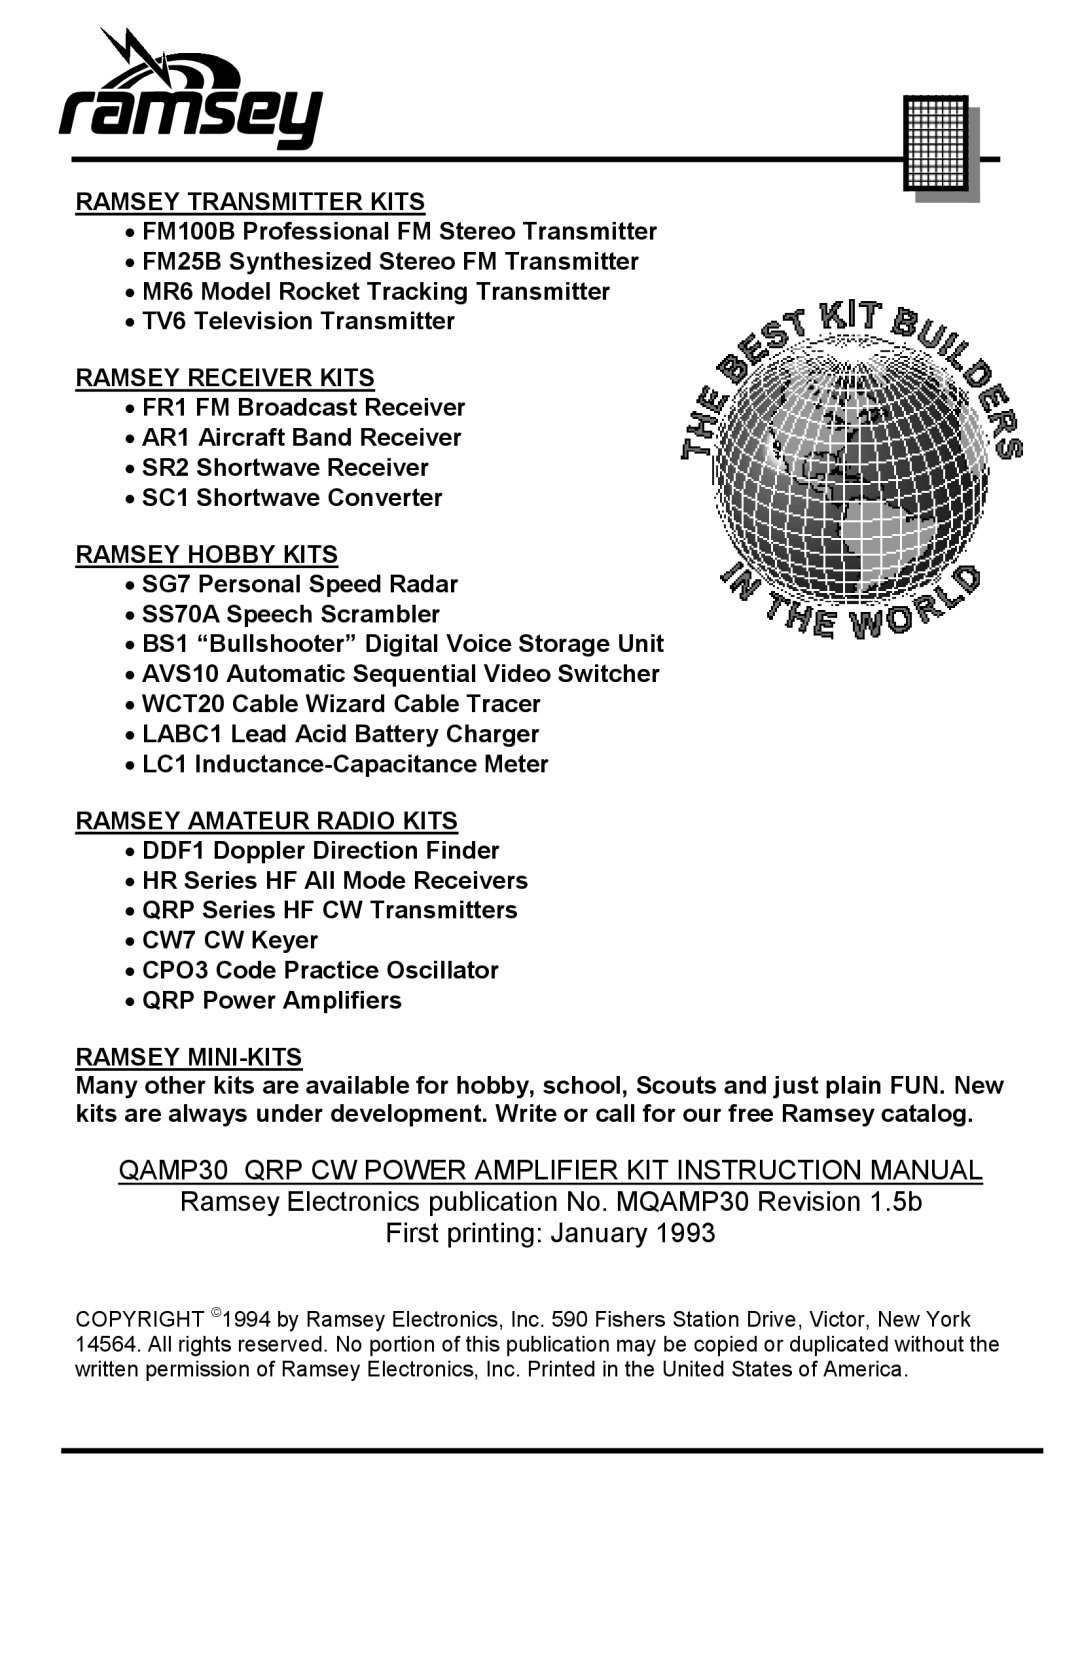 Ramsey Electronics QAMP30 manual First printing January 